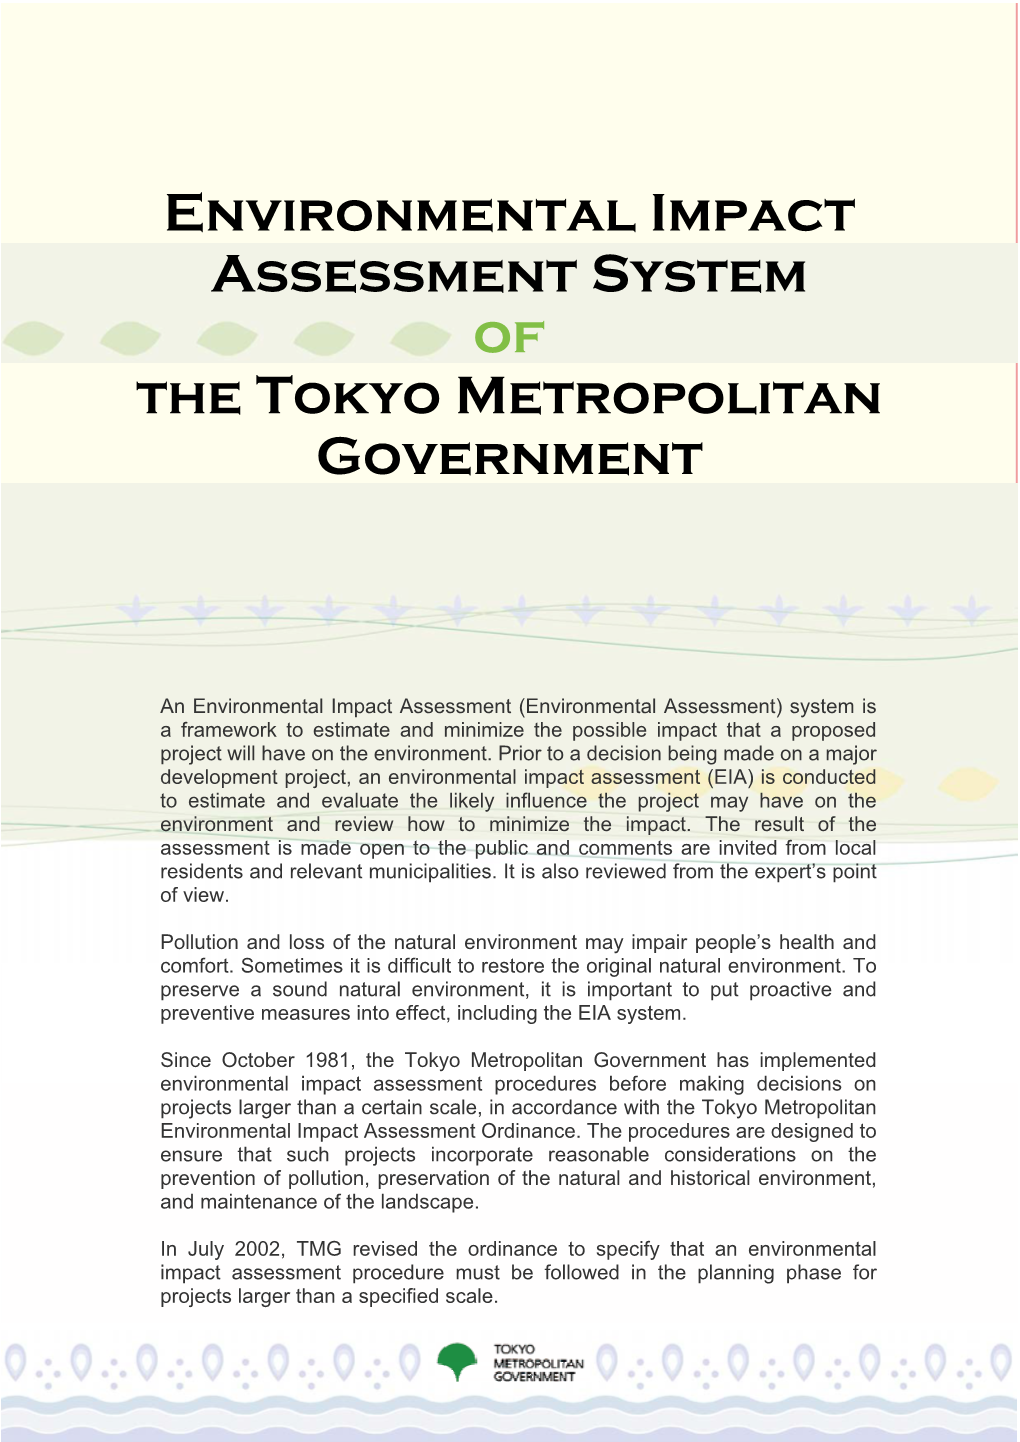 Environmental Impact Assessment System of the Tokyo Metropolitan